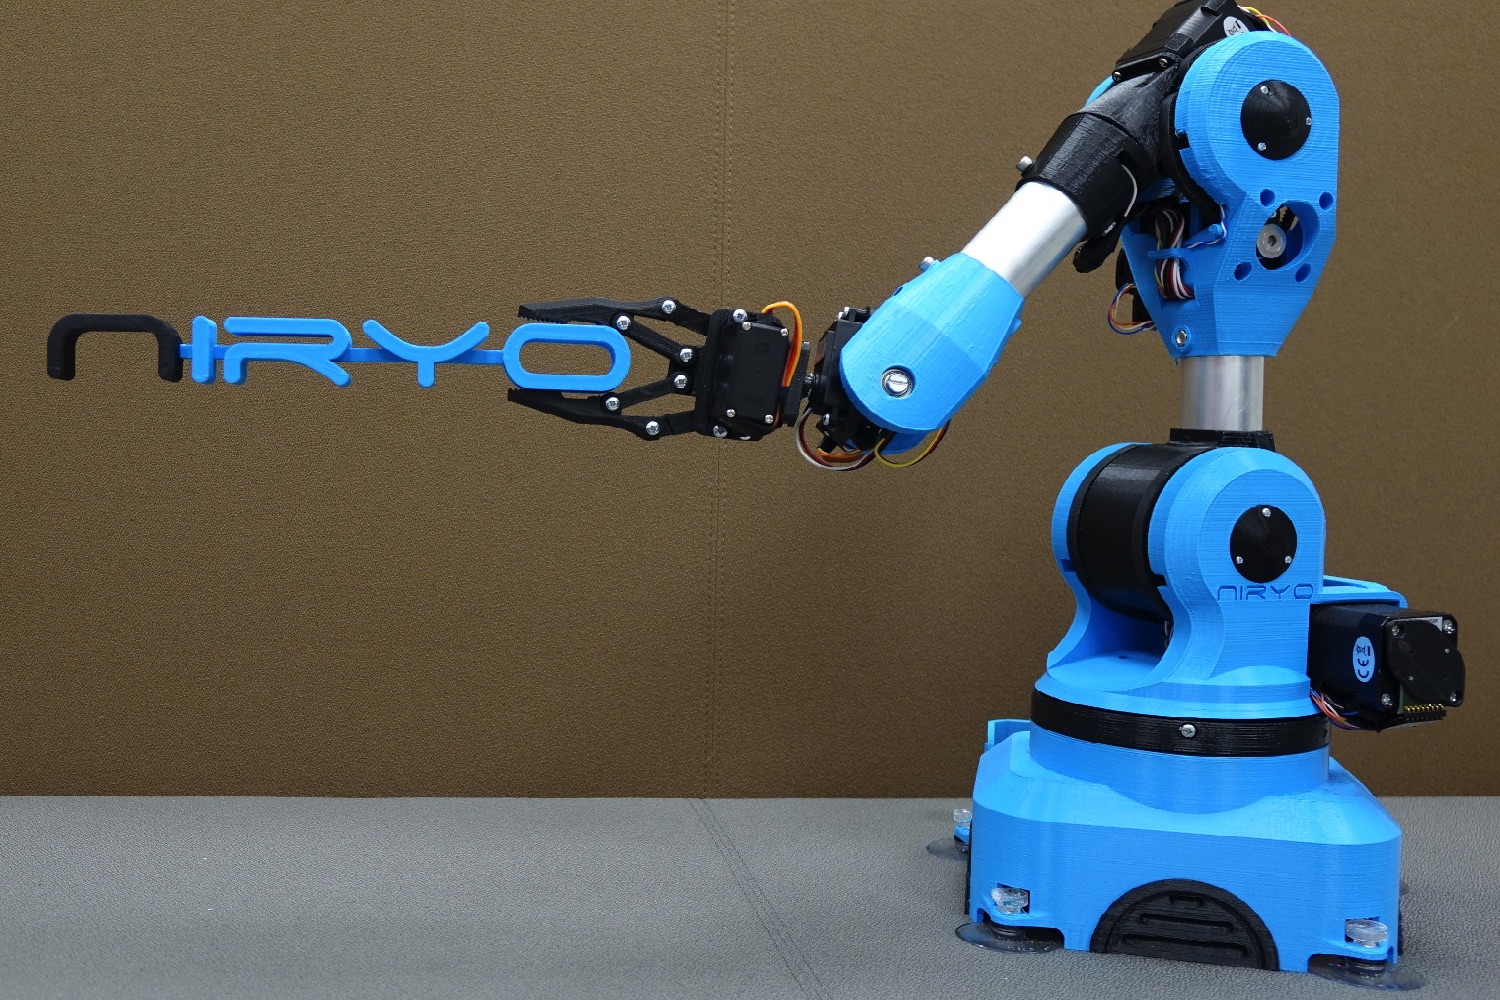 niryo one industrial arm robot kickstarter 1